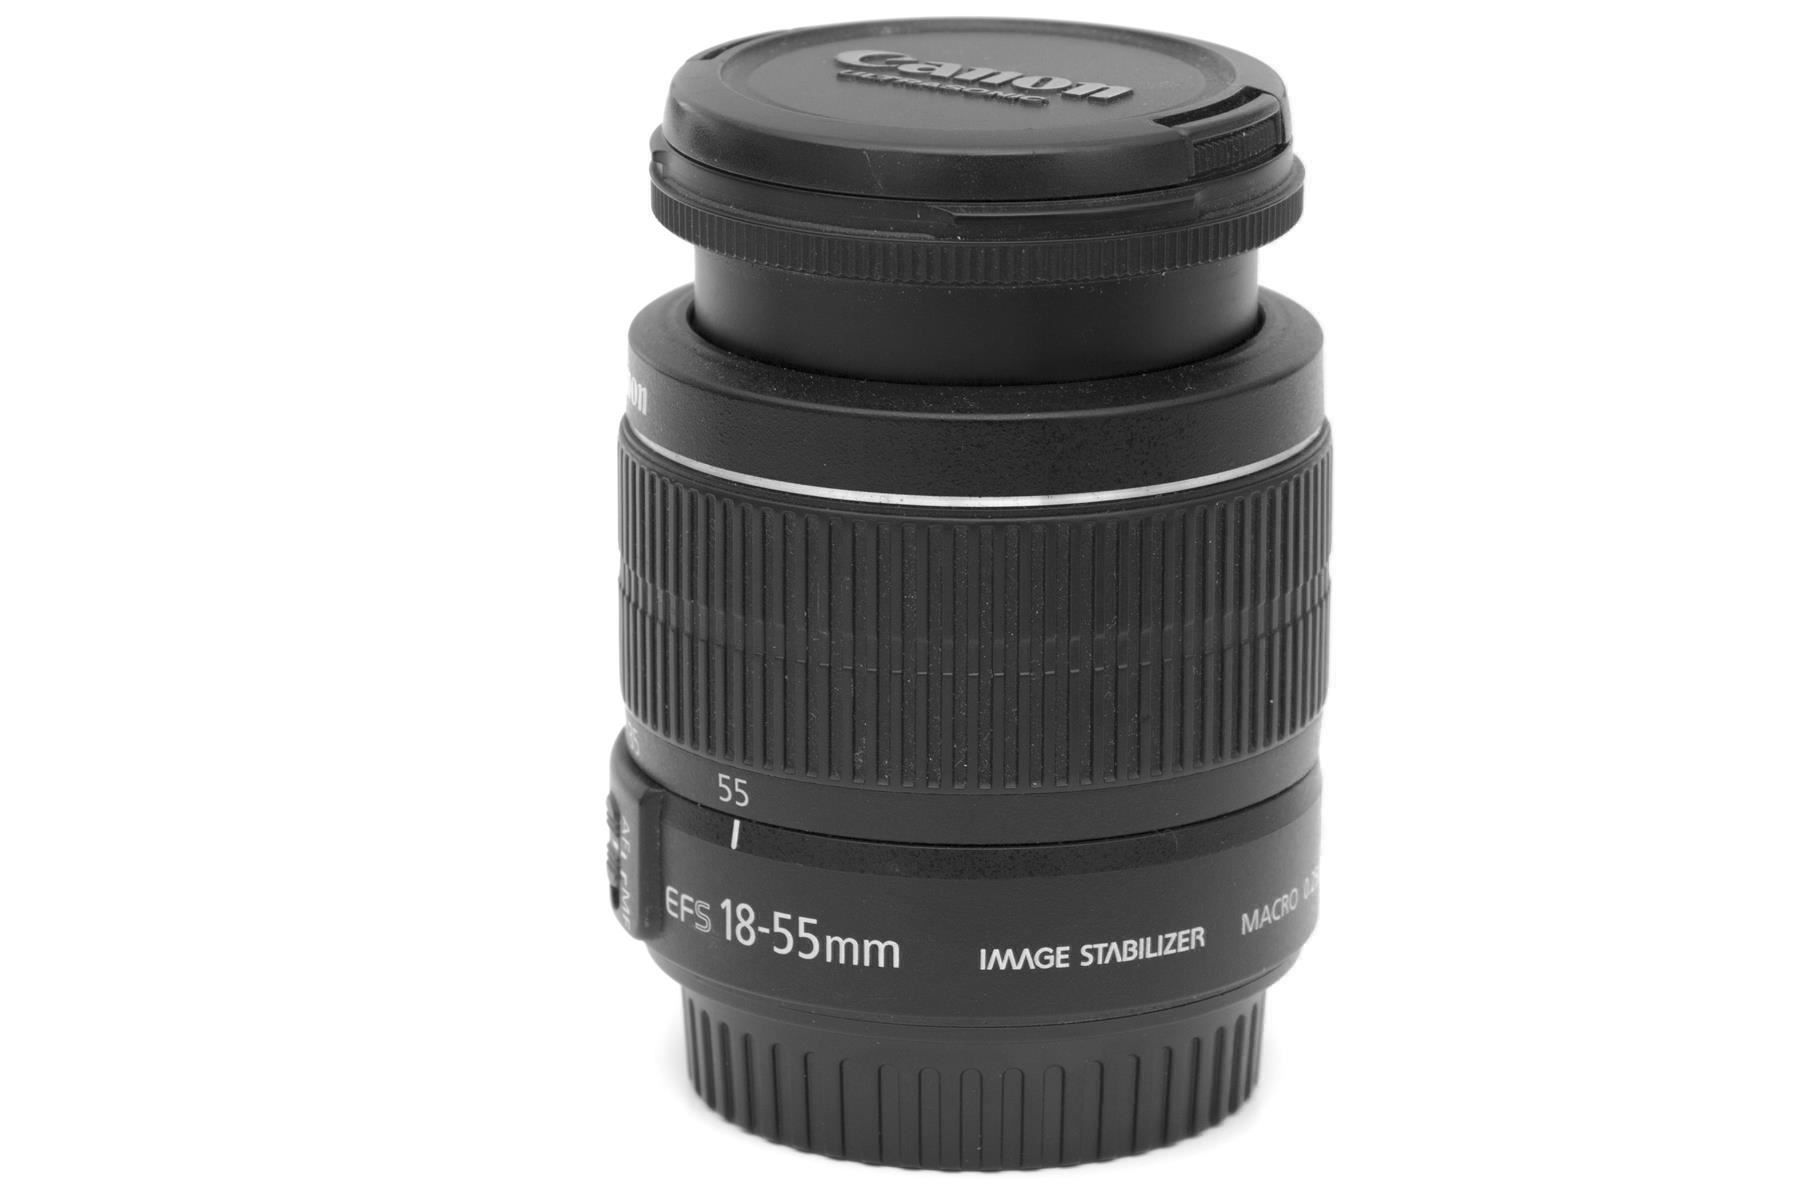 Canon EF-S 18-55mm F/3.5-5.6 IS STM Lens - $59.95 